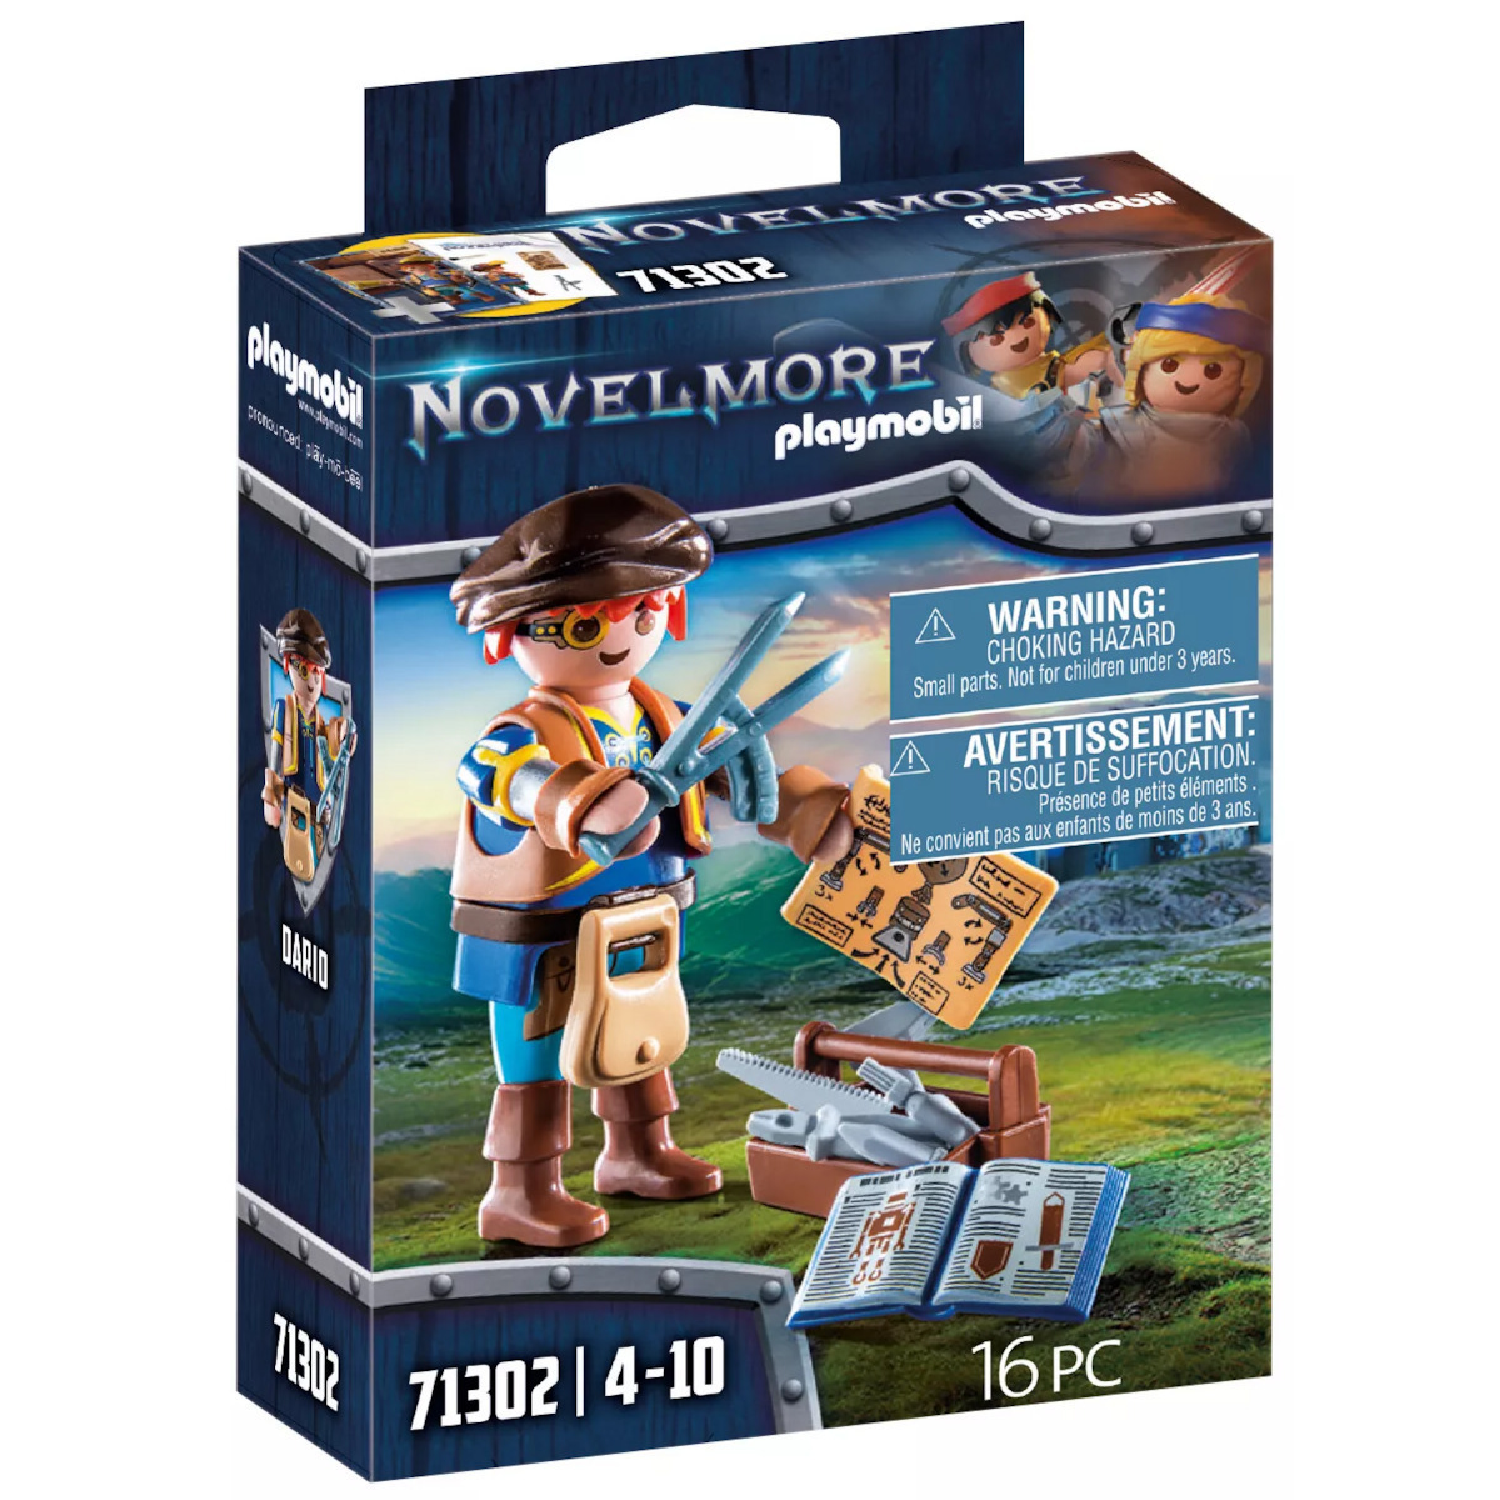 PLAYMOBIL Novelmore Mobile Fortress